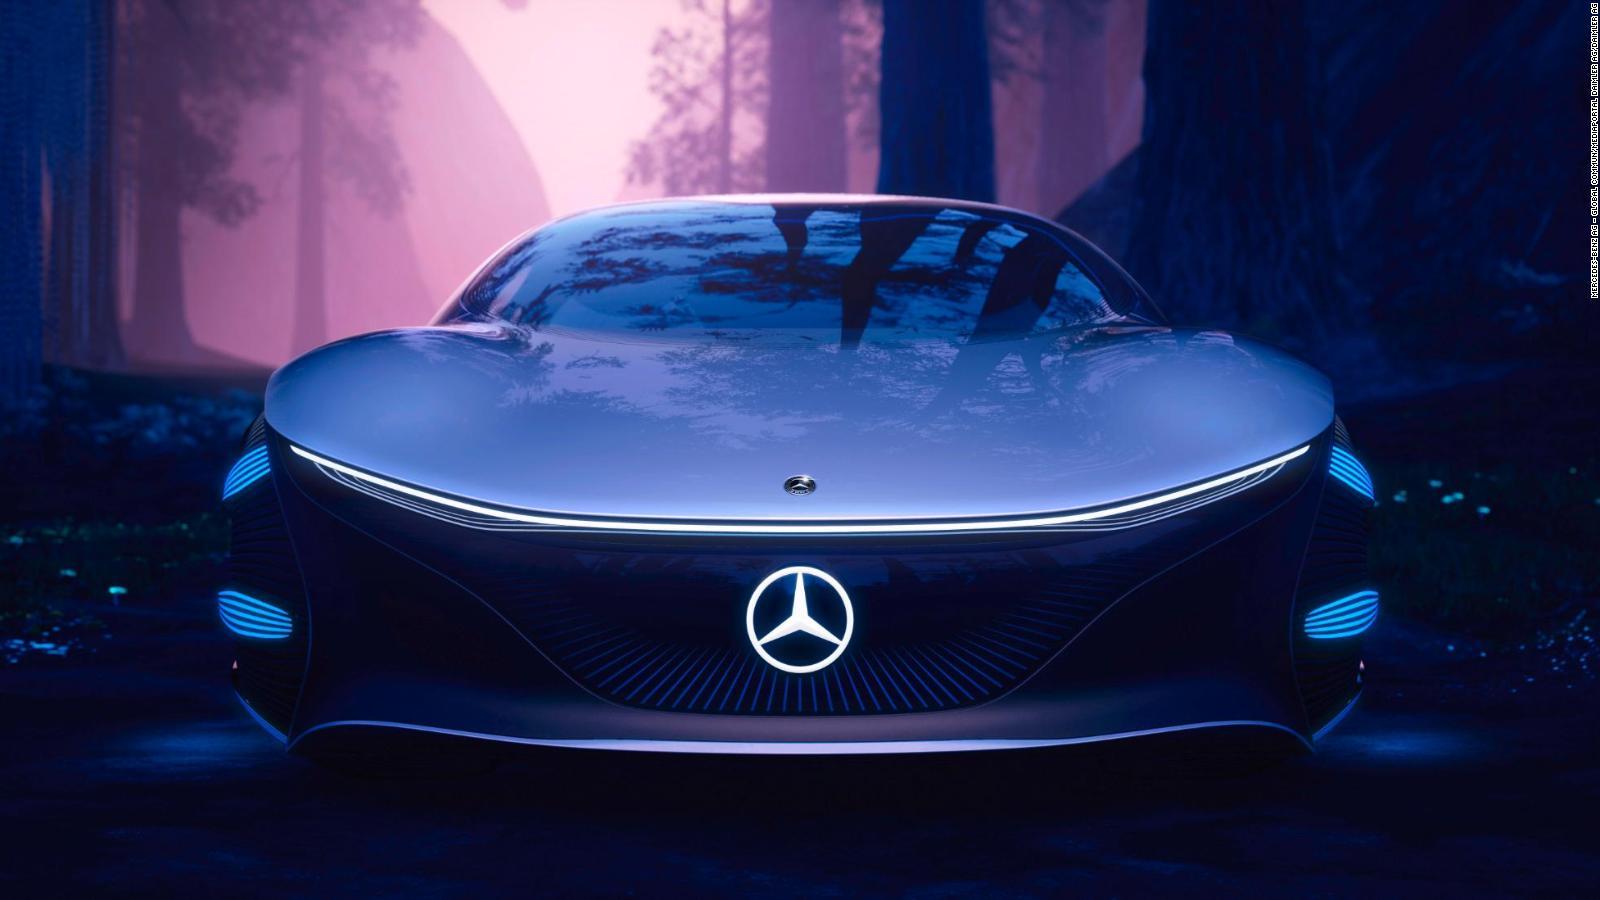 This Mercedes Benz Concept Car Has No Steering Wheel